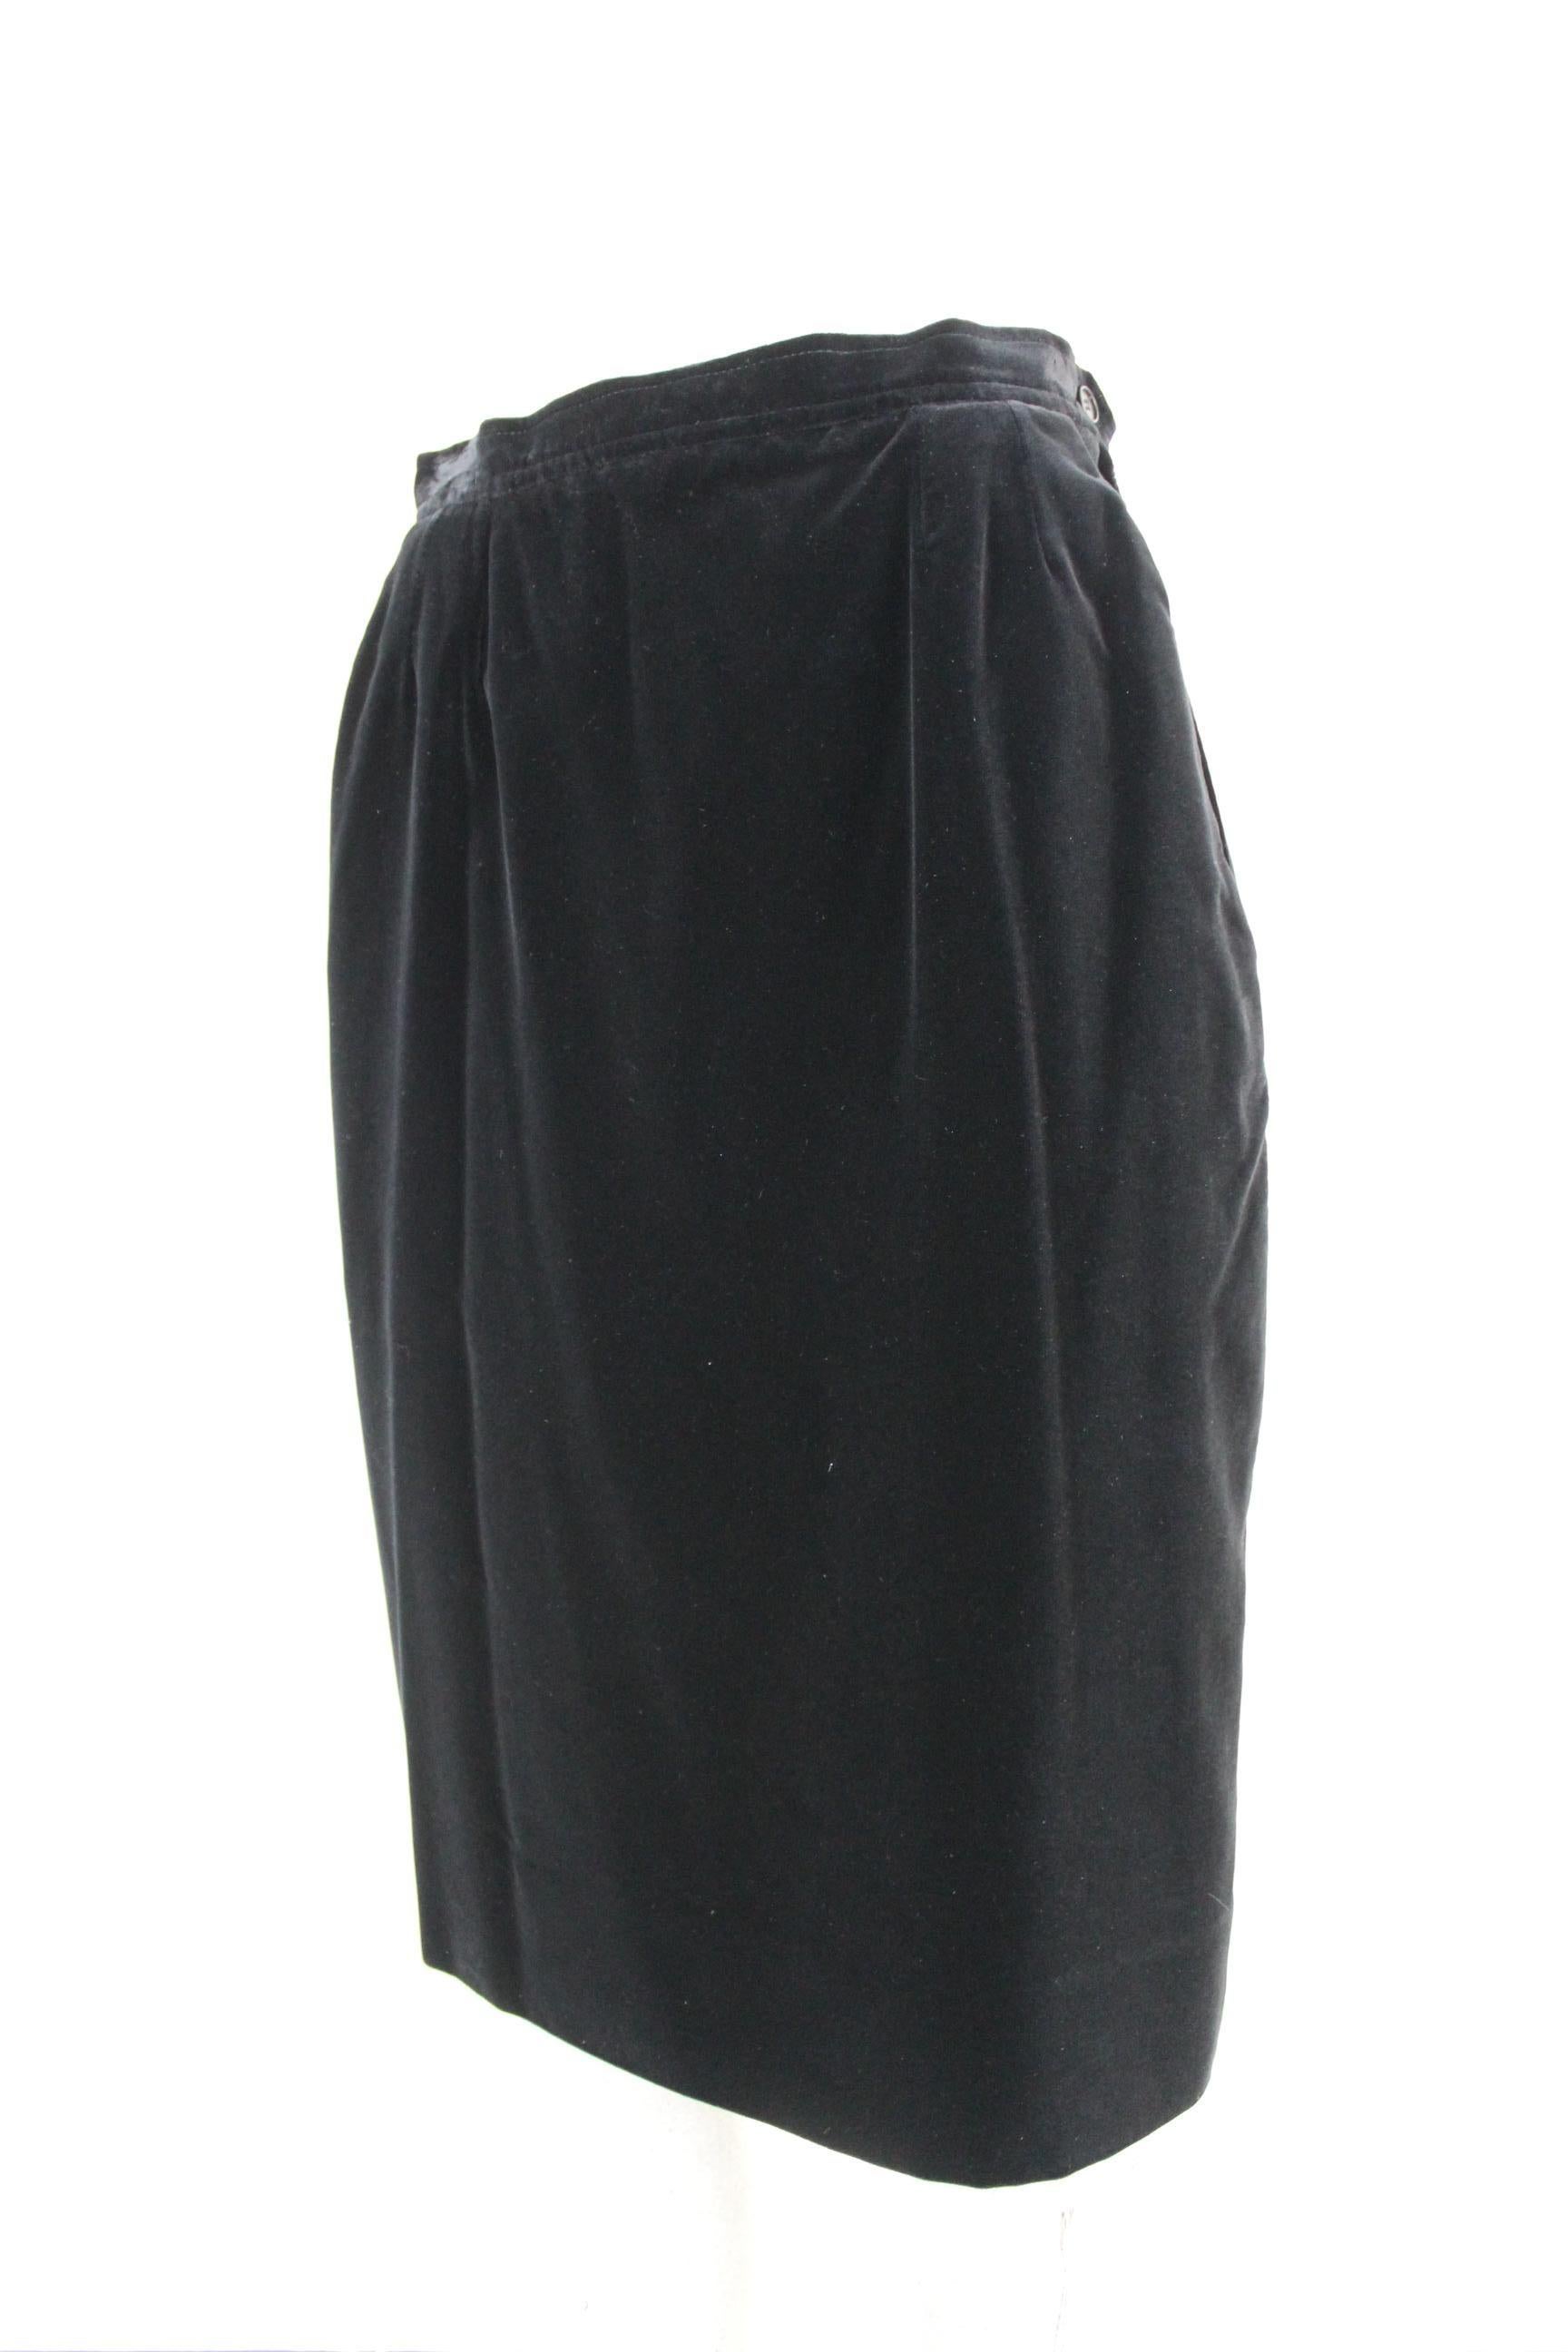 Yves Saint Laurent Rive Gauche vintage skirt 90s. Long model on the knee, velvet type fabric, 70% cotton 30% viscose. Color black. Made in France. Excellent vintage conditions.

Size: 42 It 8 Us 10 Uk

Waist: 34 cm
Length: 62 cm